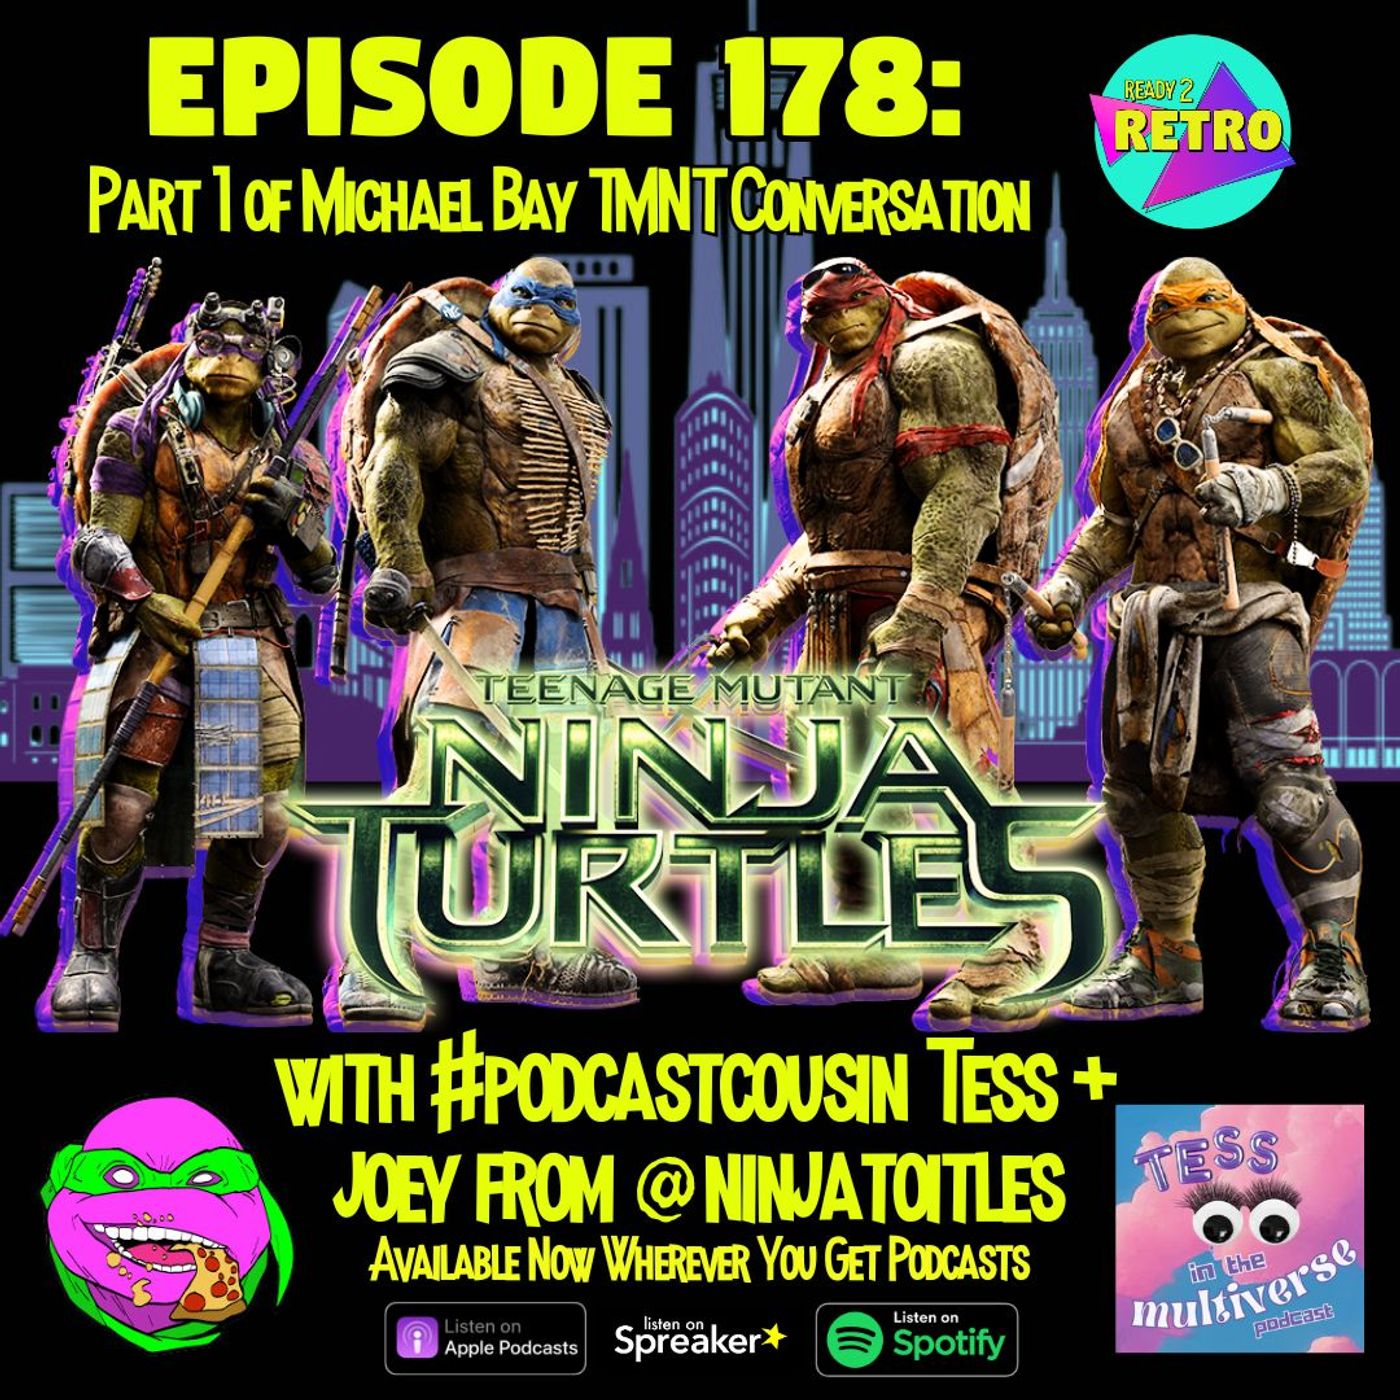 Episode 178: ”Teenage Mutant Ninja Turtles” (2014) with @tessllanos & @ninjatoitles